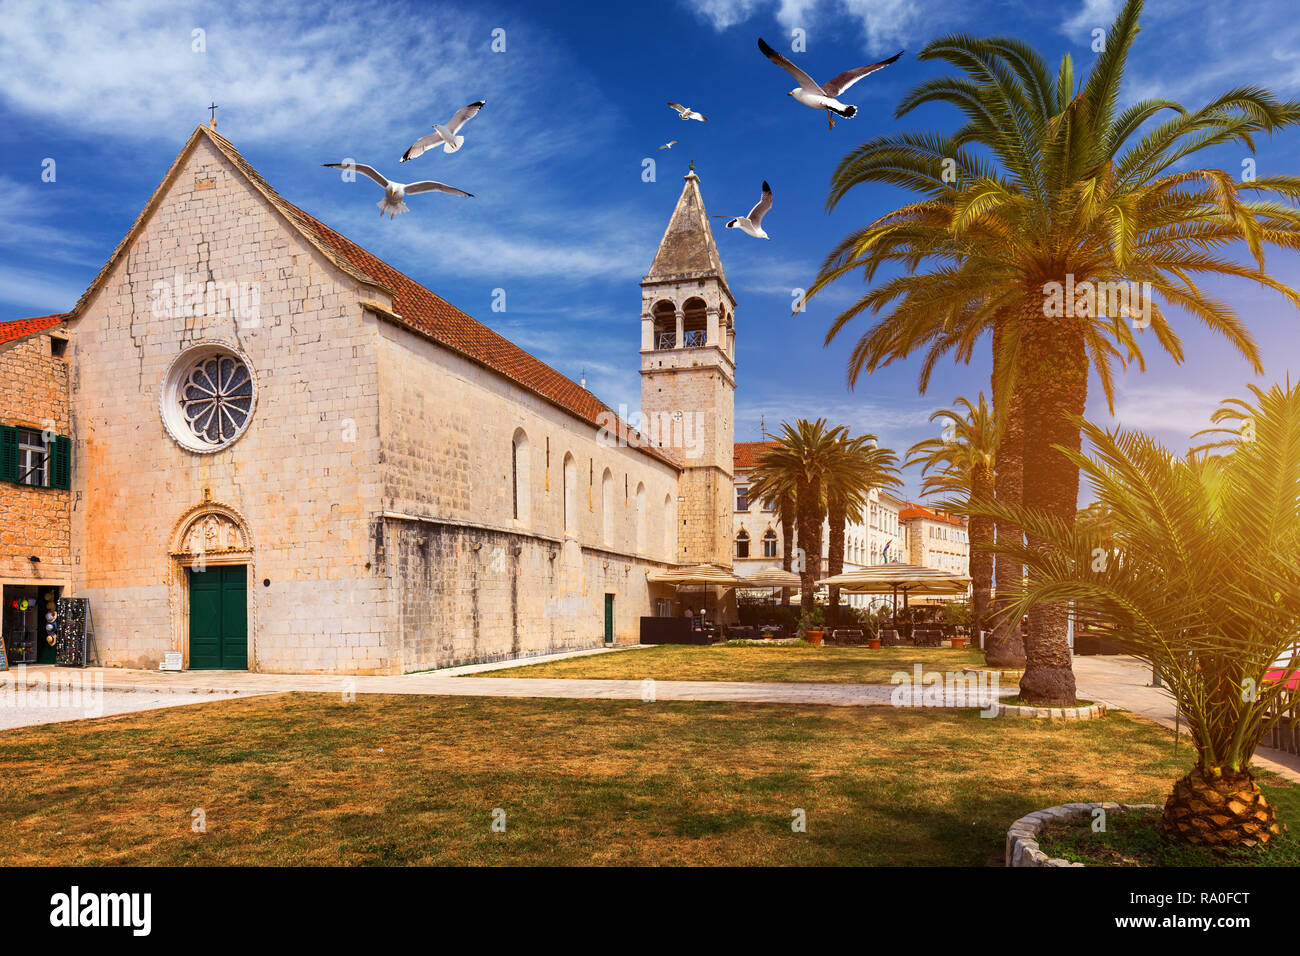 Church of St. Dominic in Trogir Croatia. St Dominic church (Dominican church) in the old town of Trogir, Croatia. Seagull's flying over Trogir. Stock Photo